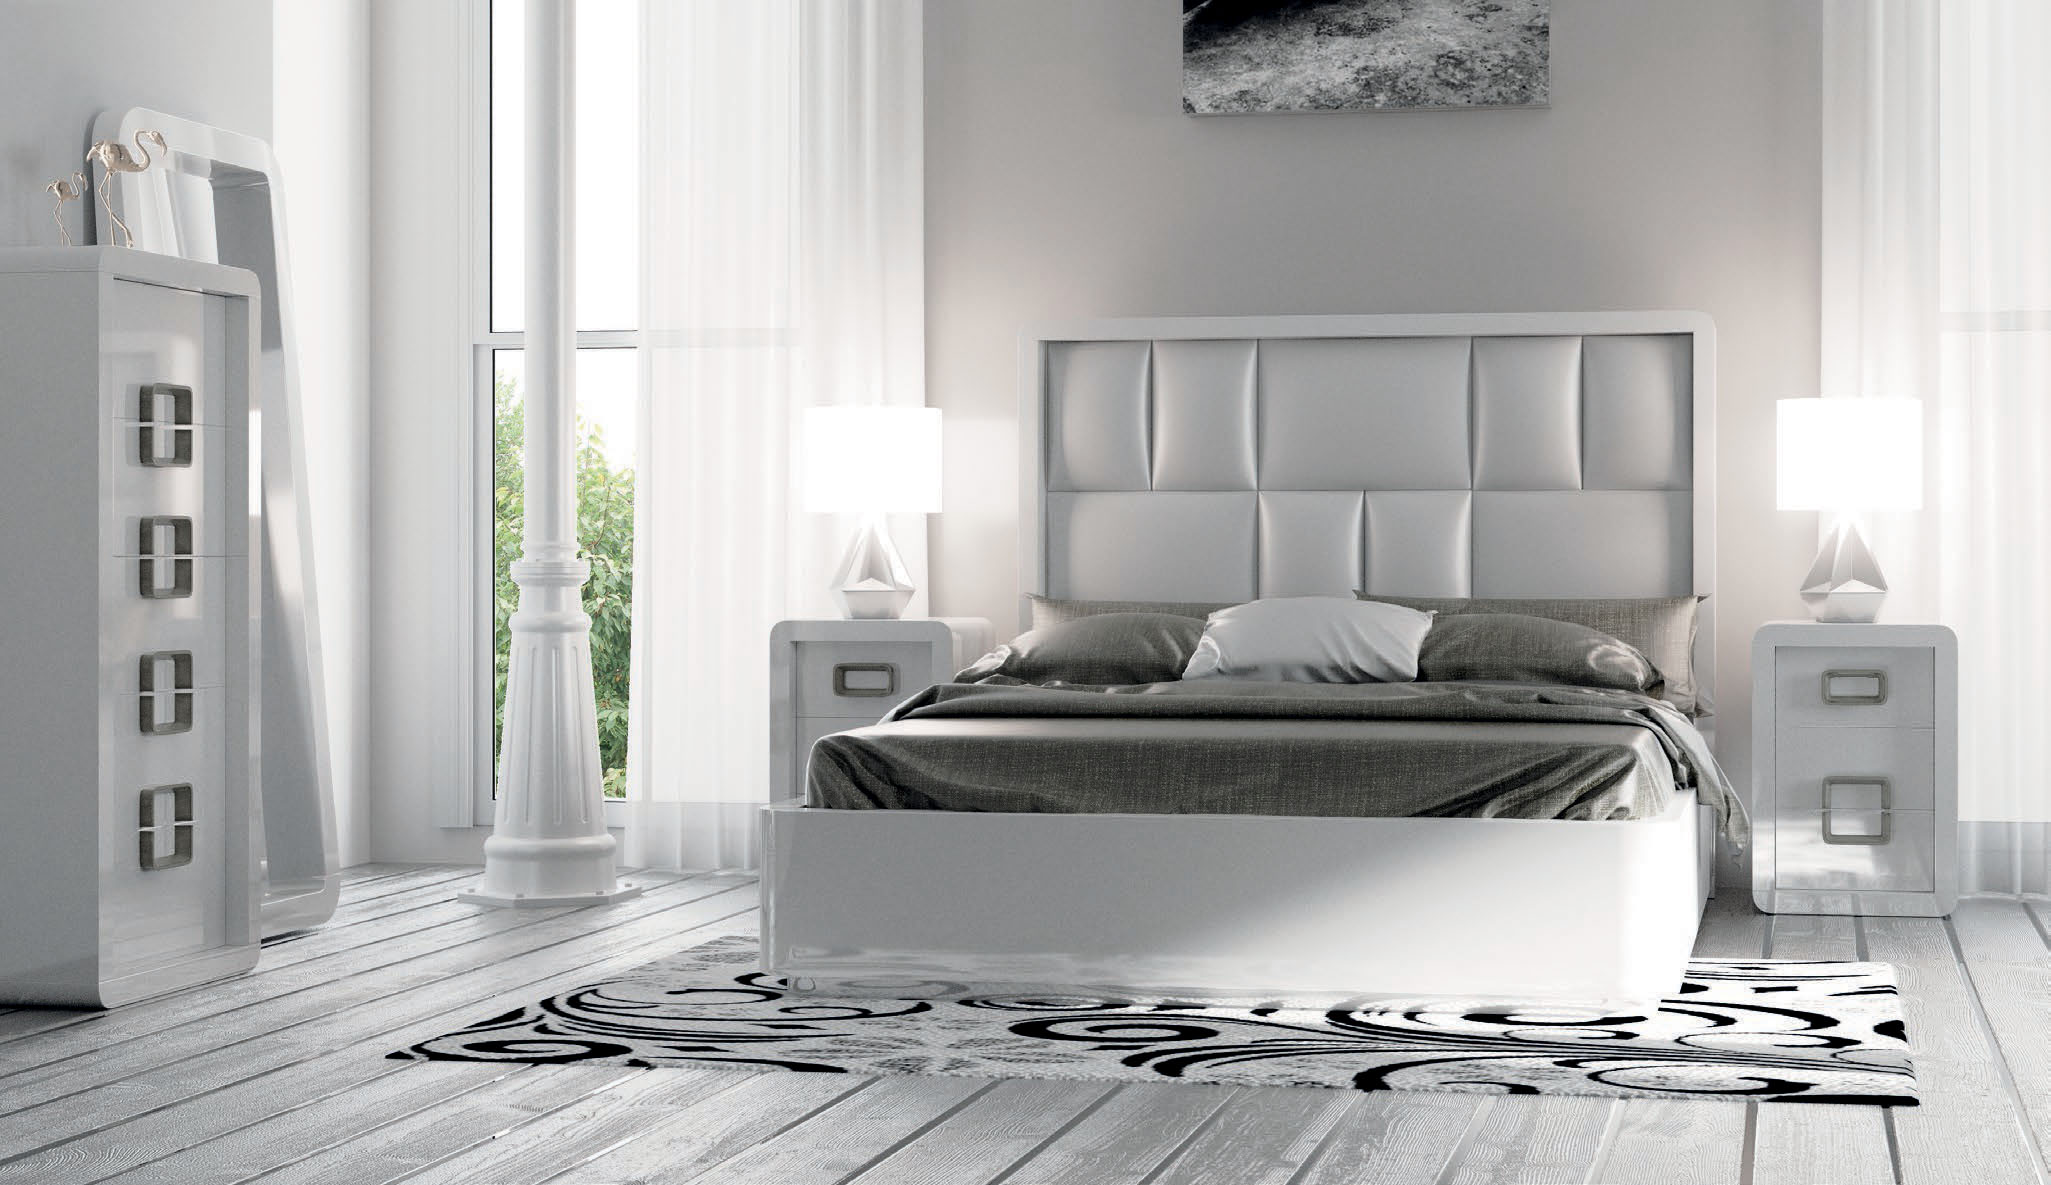 Brands Franco Furniture Bedrooms vol2, Spain DOR 174